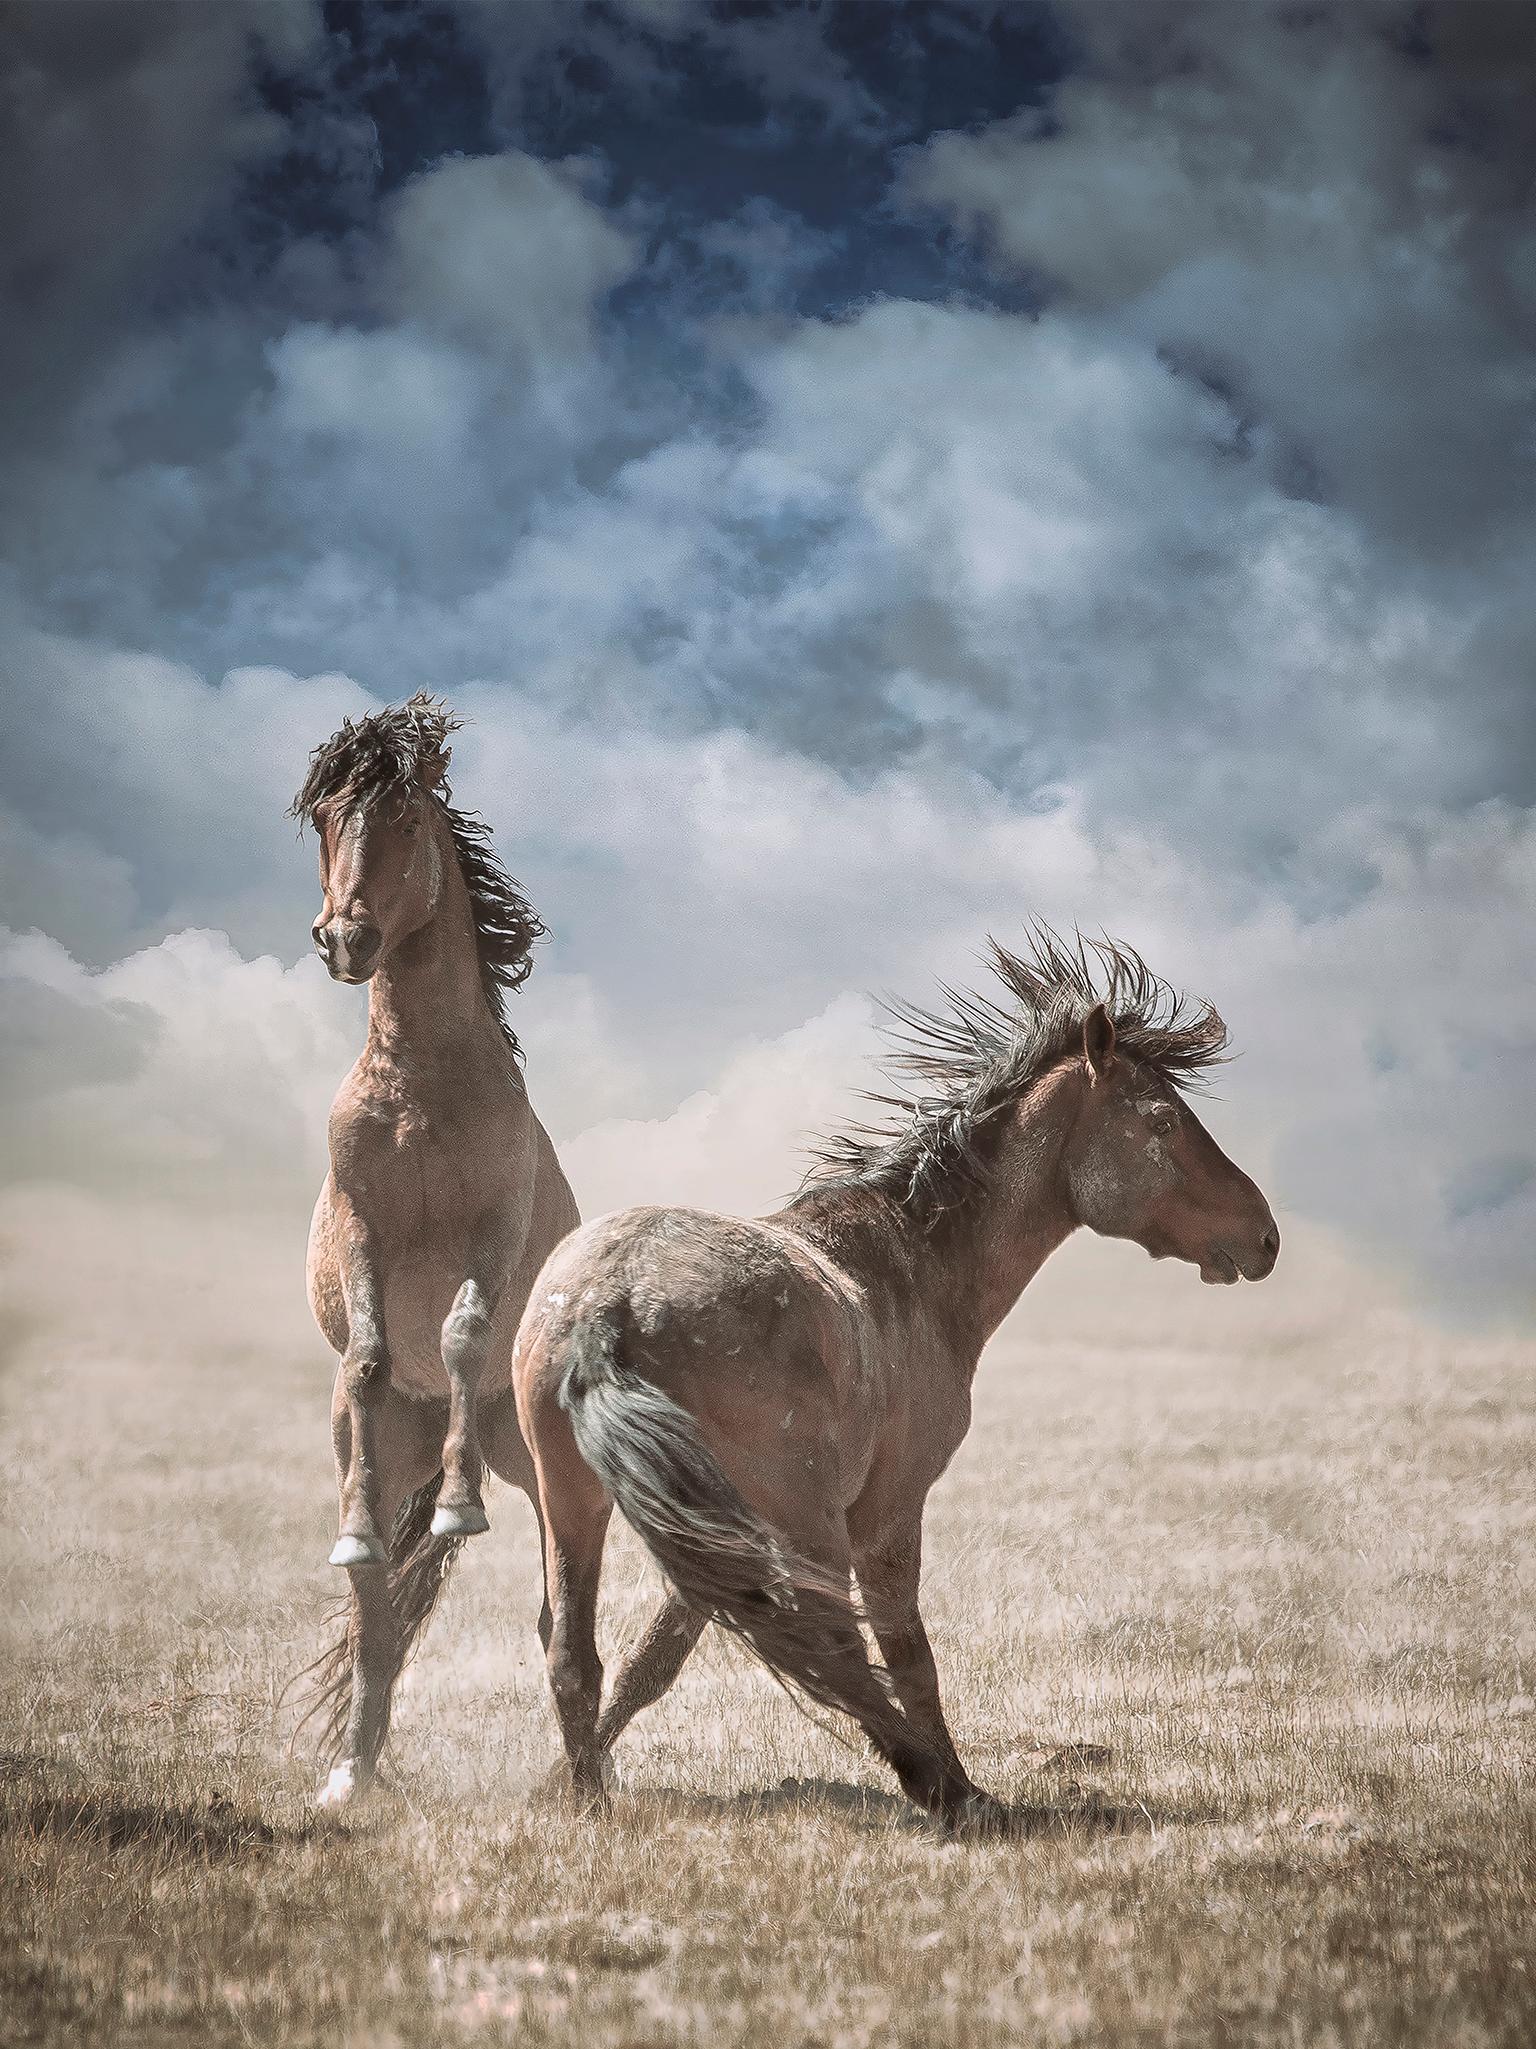 Shane Russeck Animal Print - Wonder Horses 40 x 60  - Wild Horses - Wild Mustangs Photography Western Art